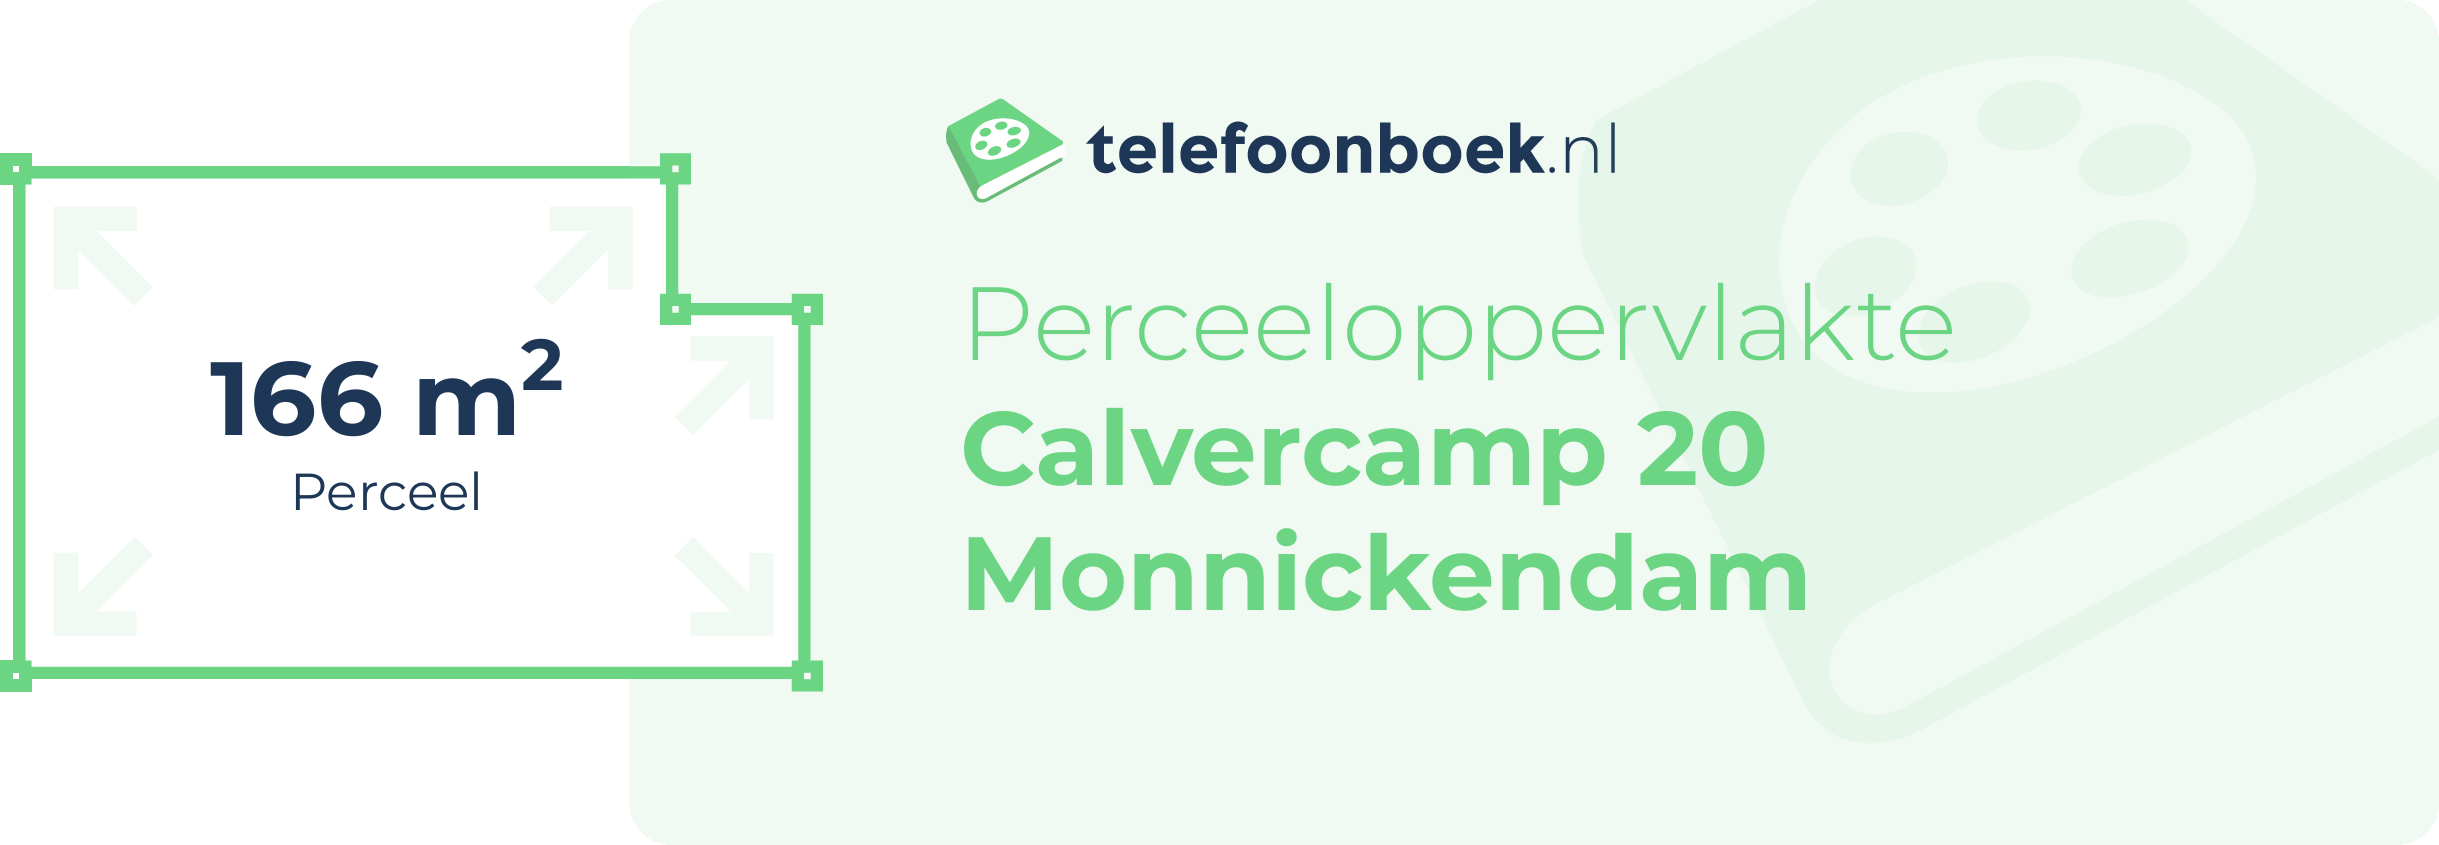 Perceeloppervlakte Calvercamp 20 Monnickendam